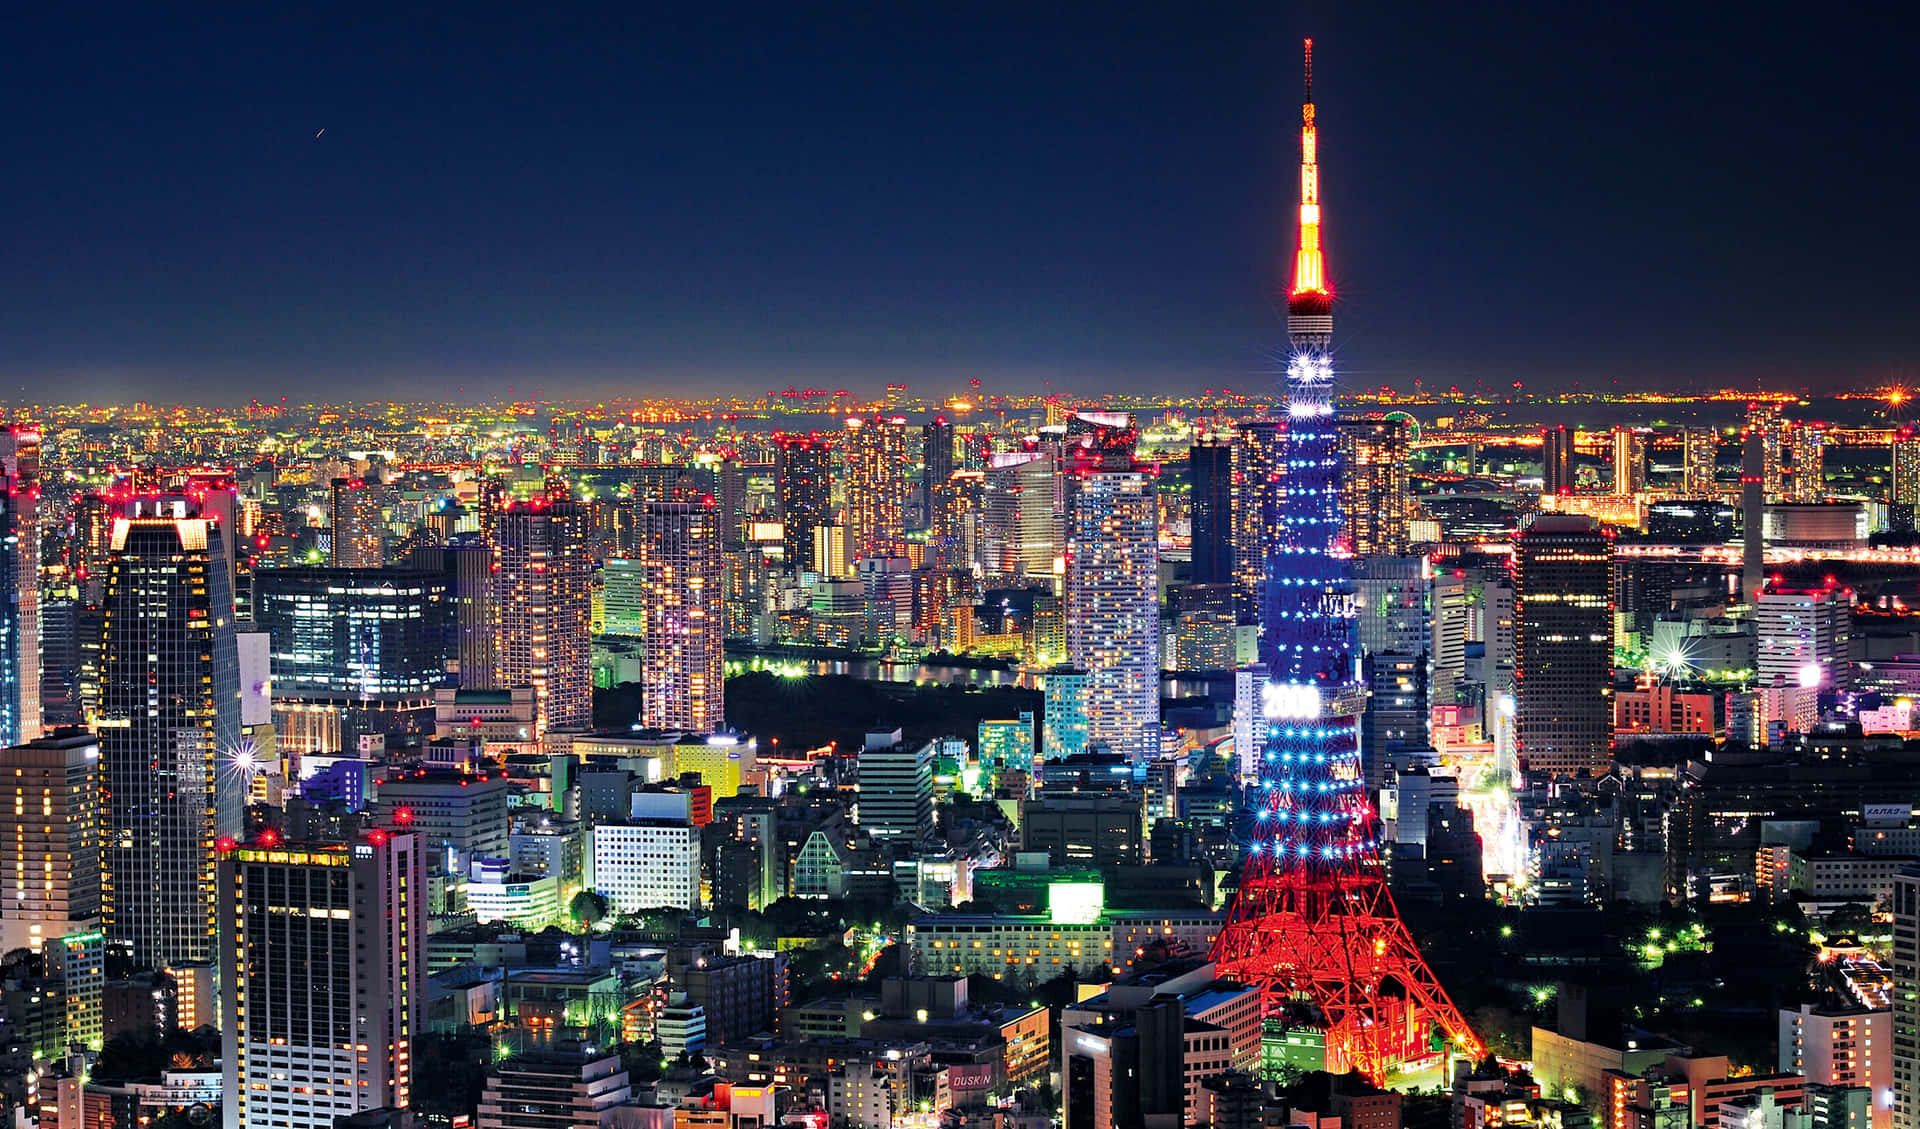 Explore Tokyo's enchanting cityscape